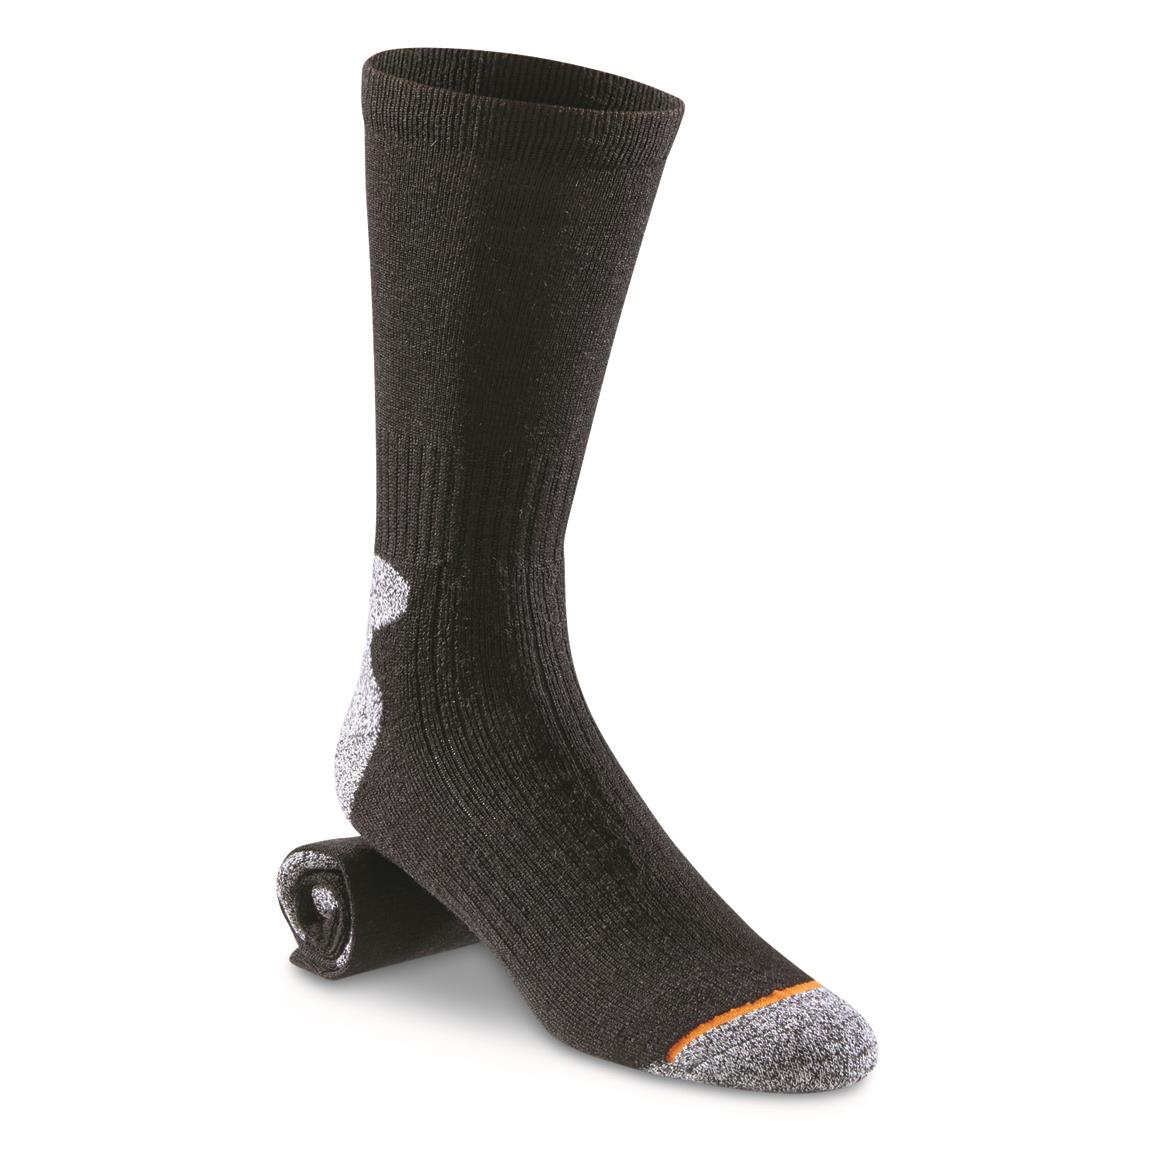 U.S. Municipal Surplus Wool Blend Boot Socks, 3 Pairs, New, Black